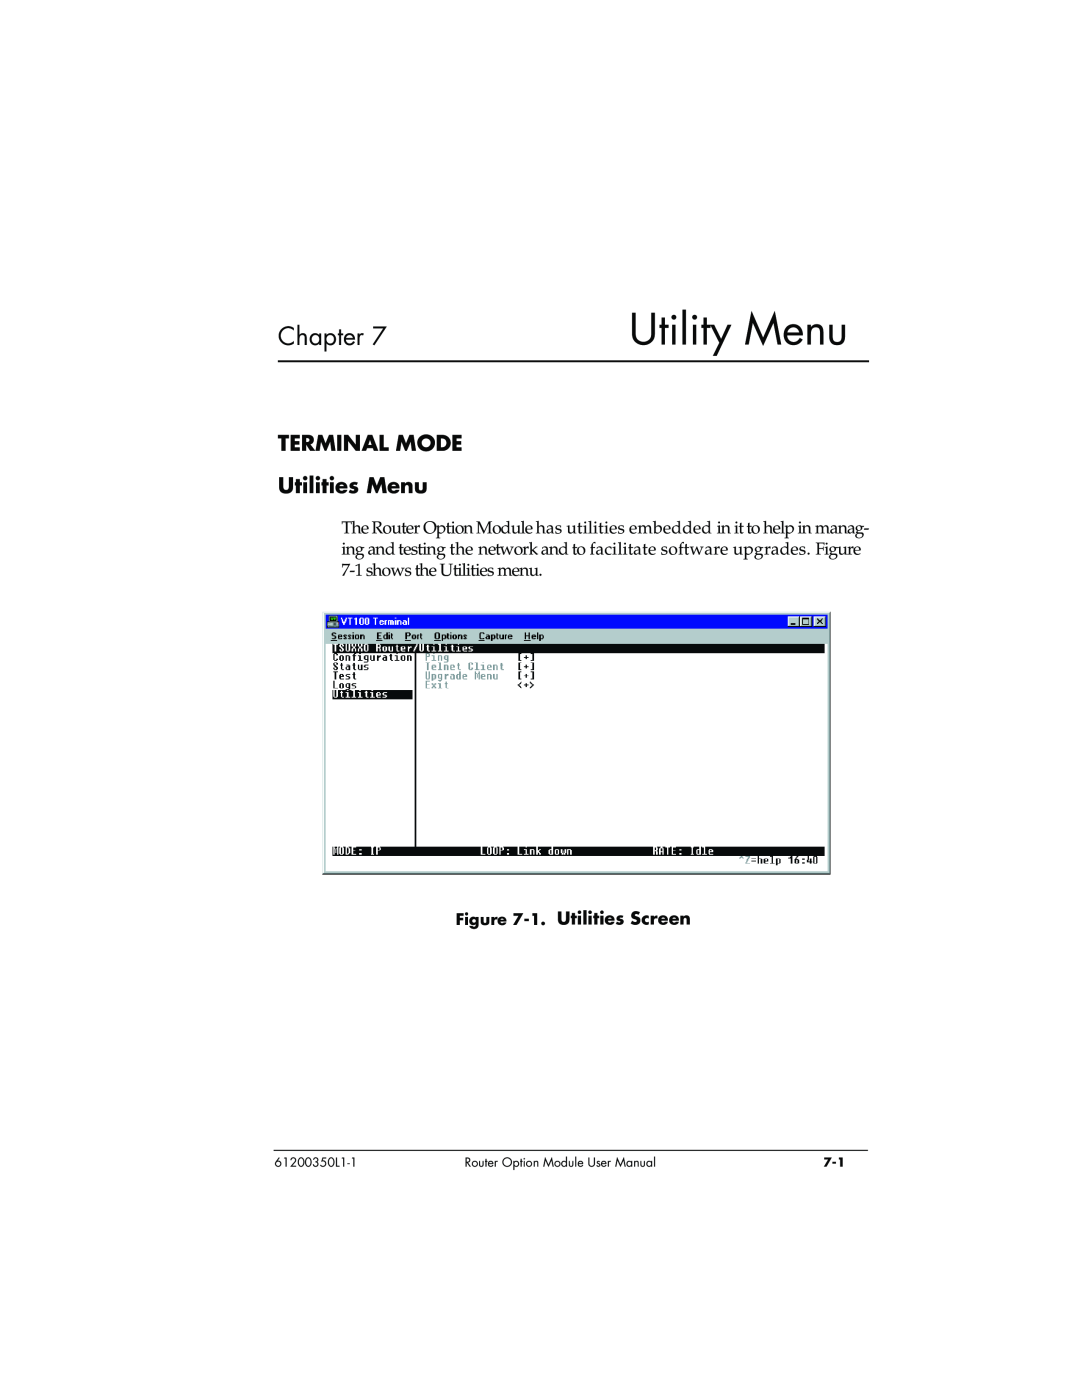 ADTRAN user manual Utility Menu, TERMINAL MODE Utilities Menu, 1. Utilities Screen, Chapter, 61200350L1-1 